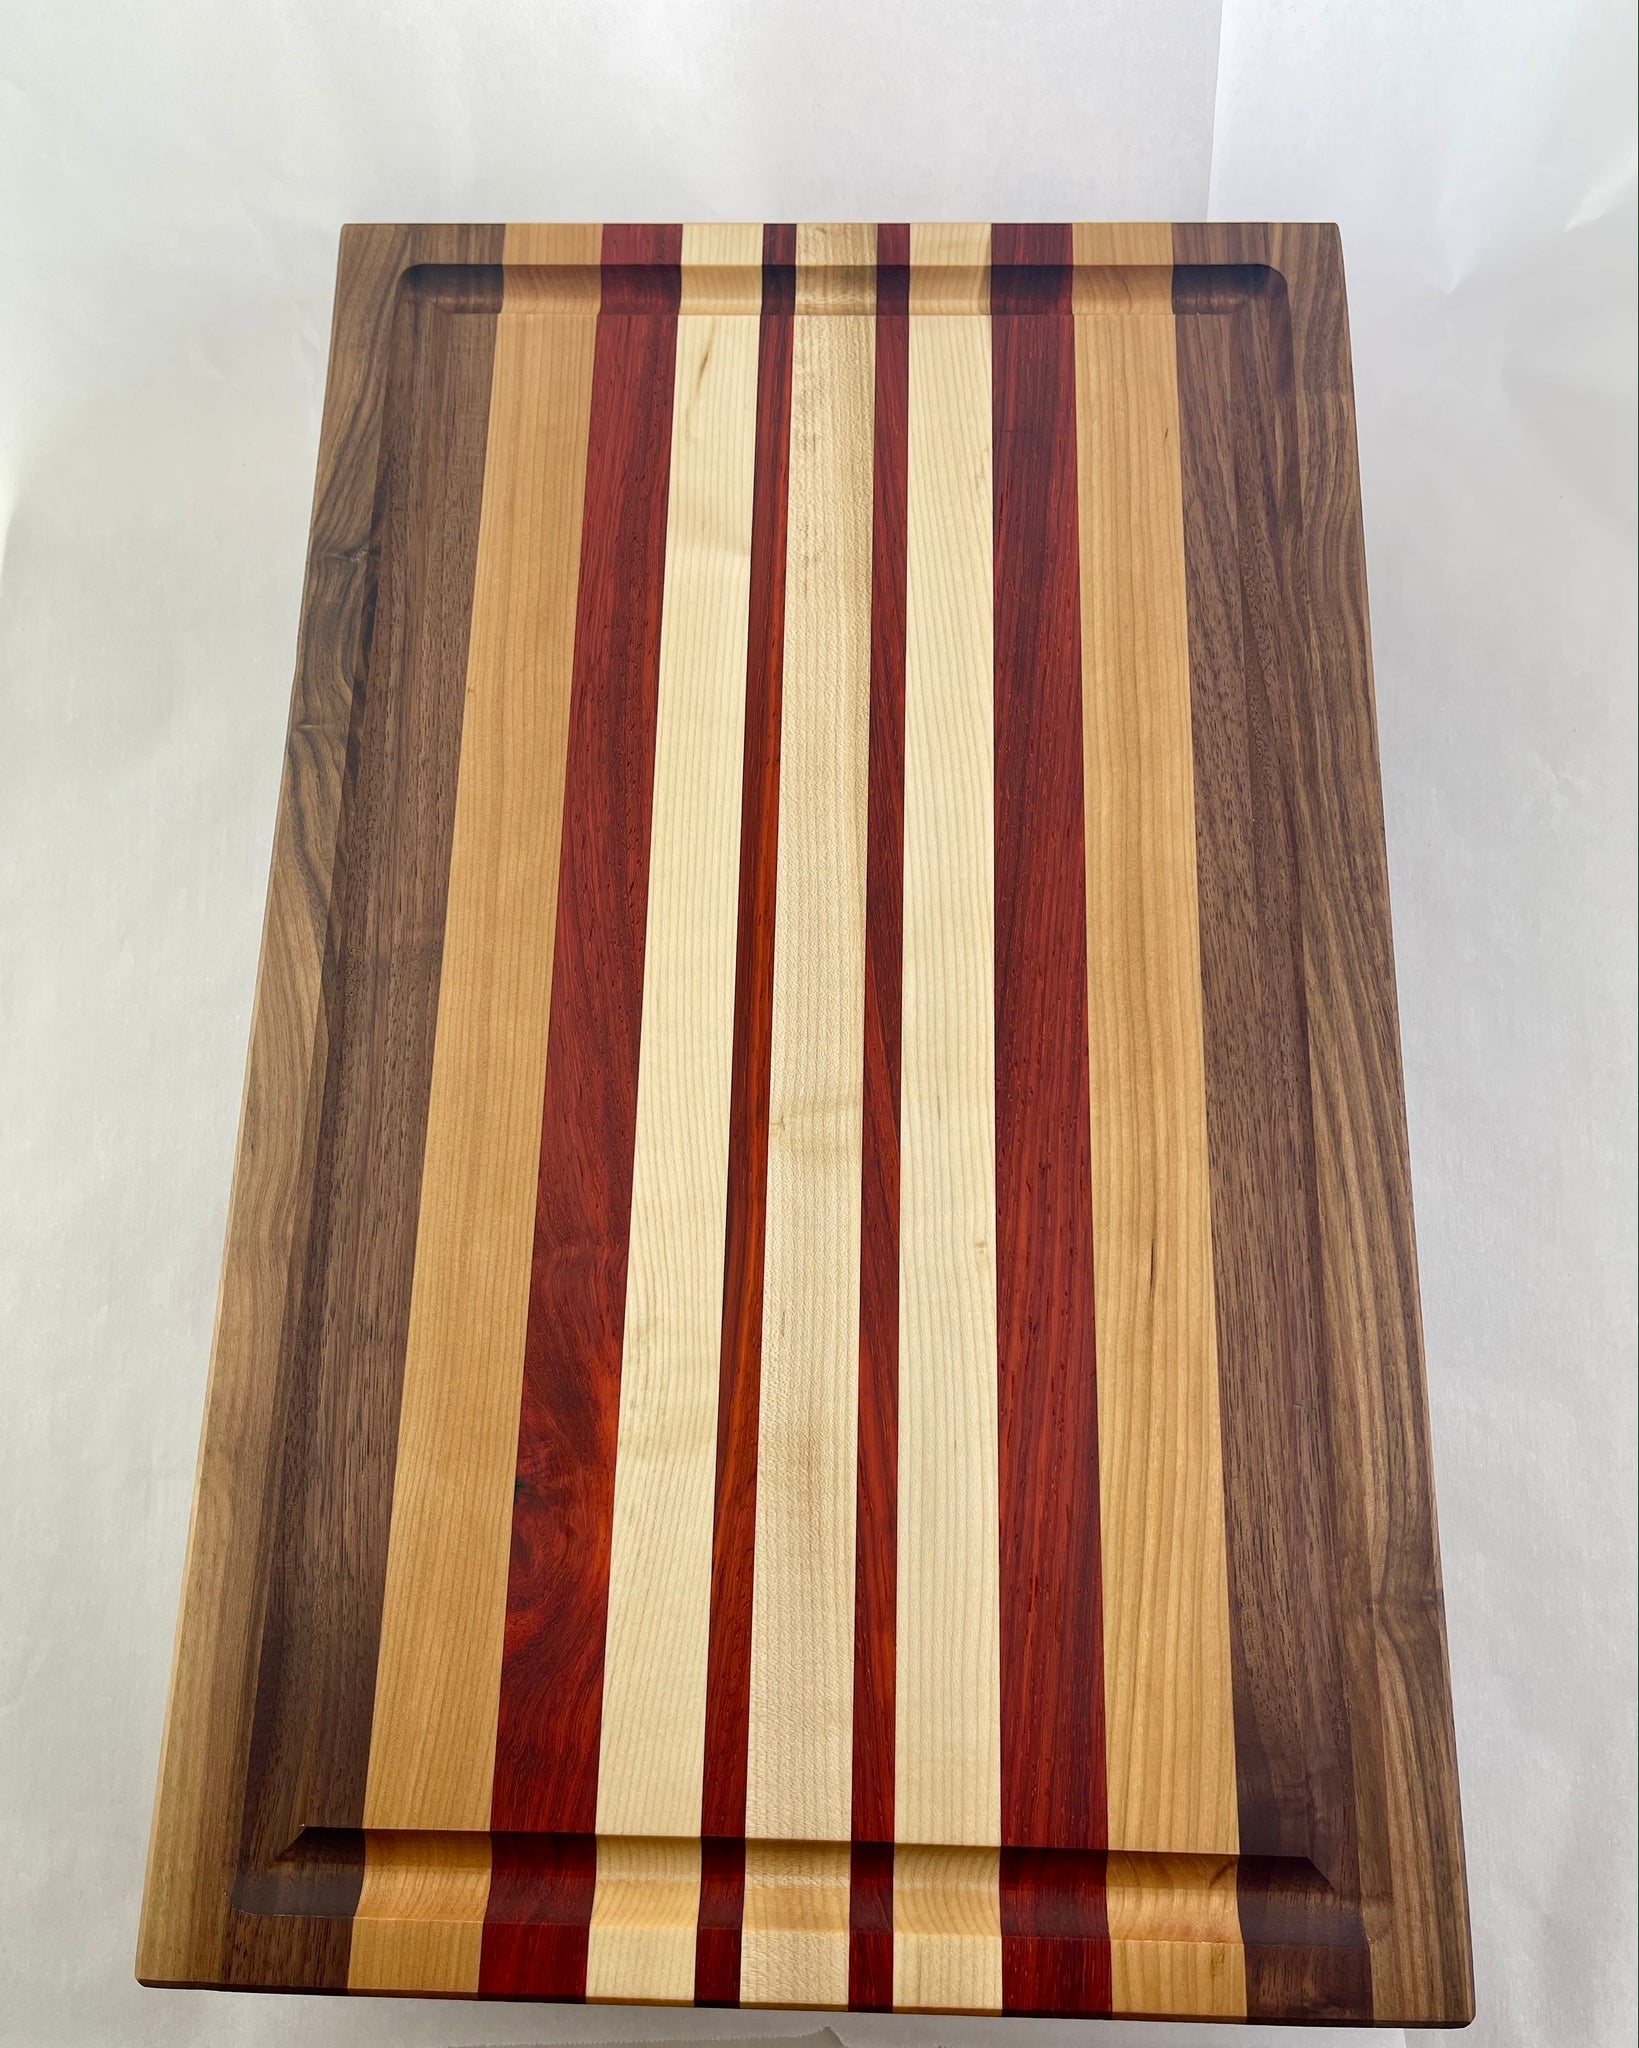 Premium Wood Cutting Boards & Butcher Block in Maple, Walnut, Cherry